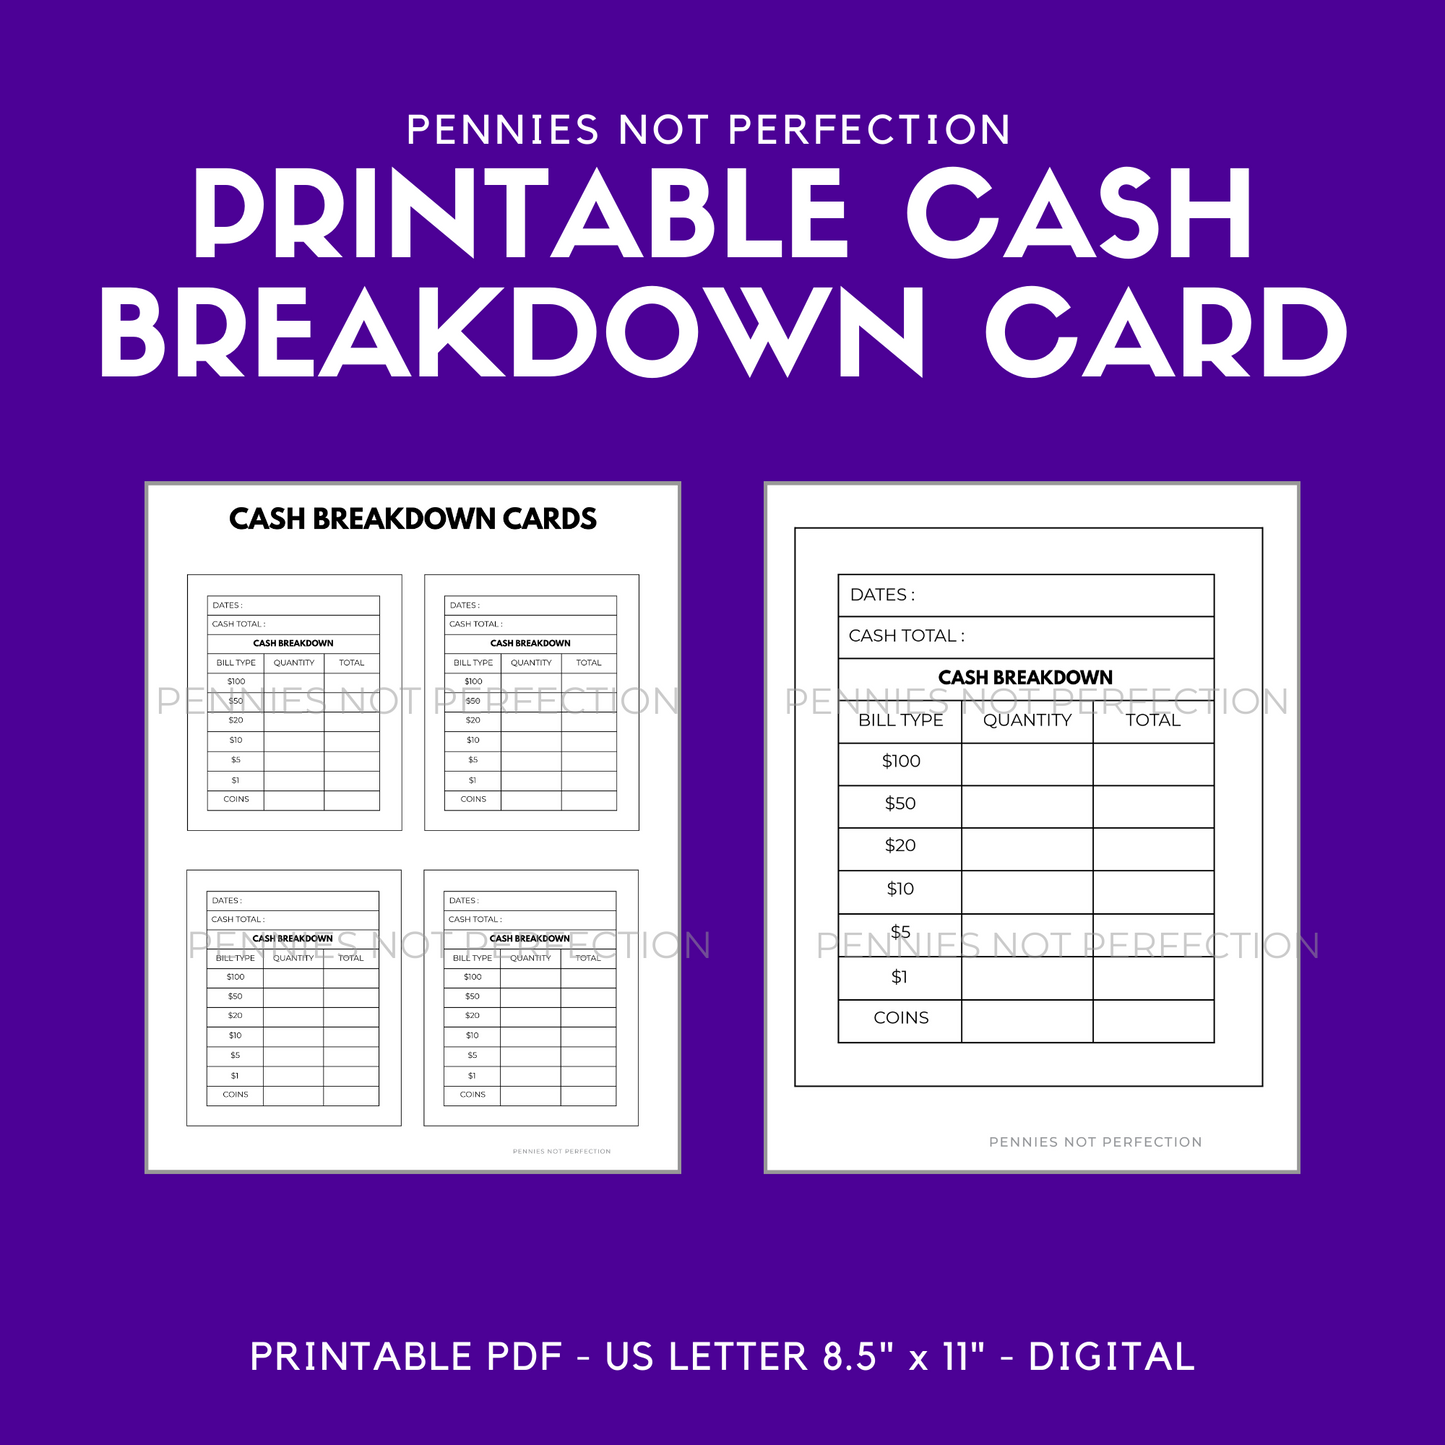 Cash Breakdown Card Printable | Cash Envelope System Printable